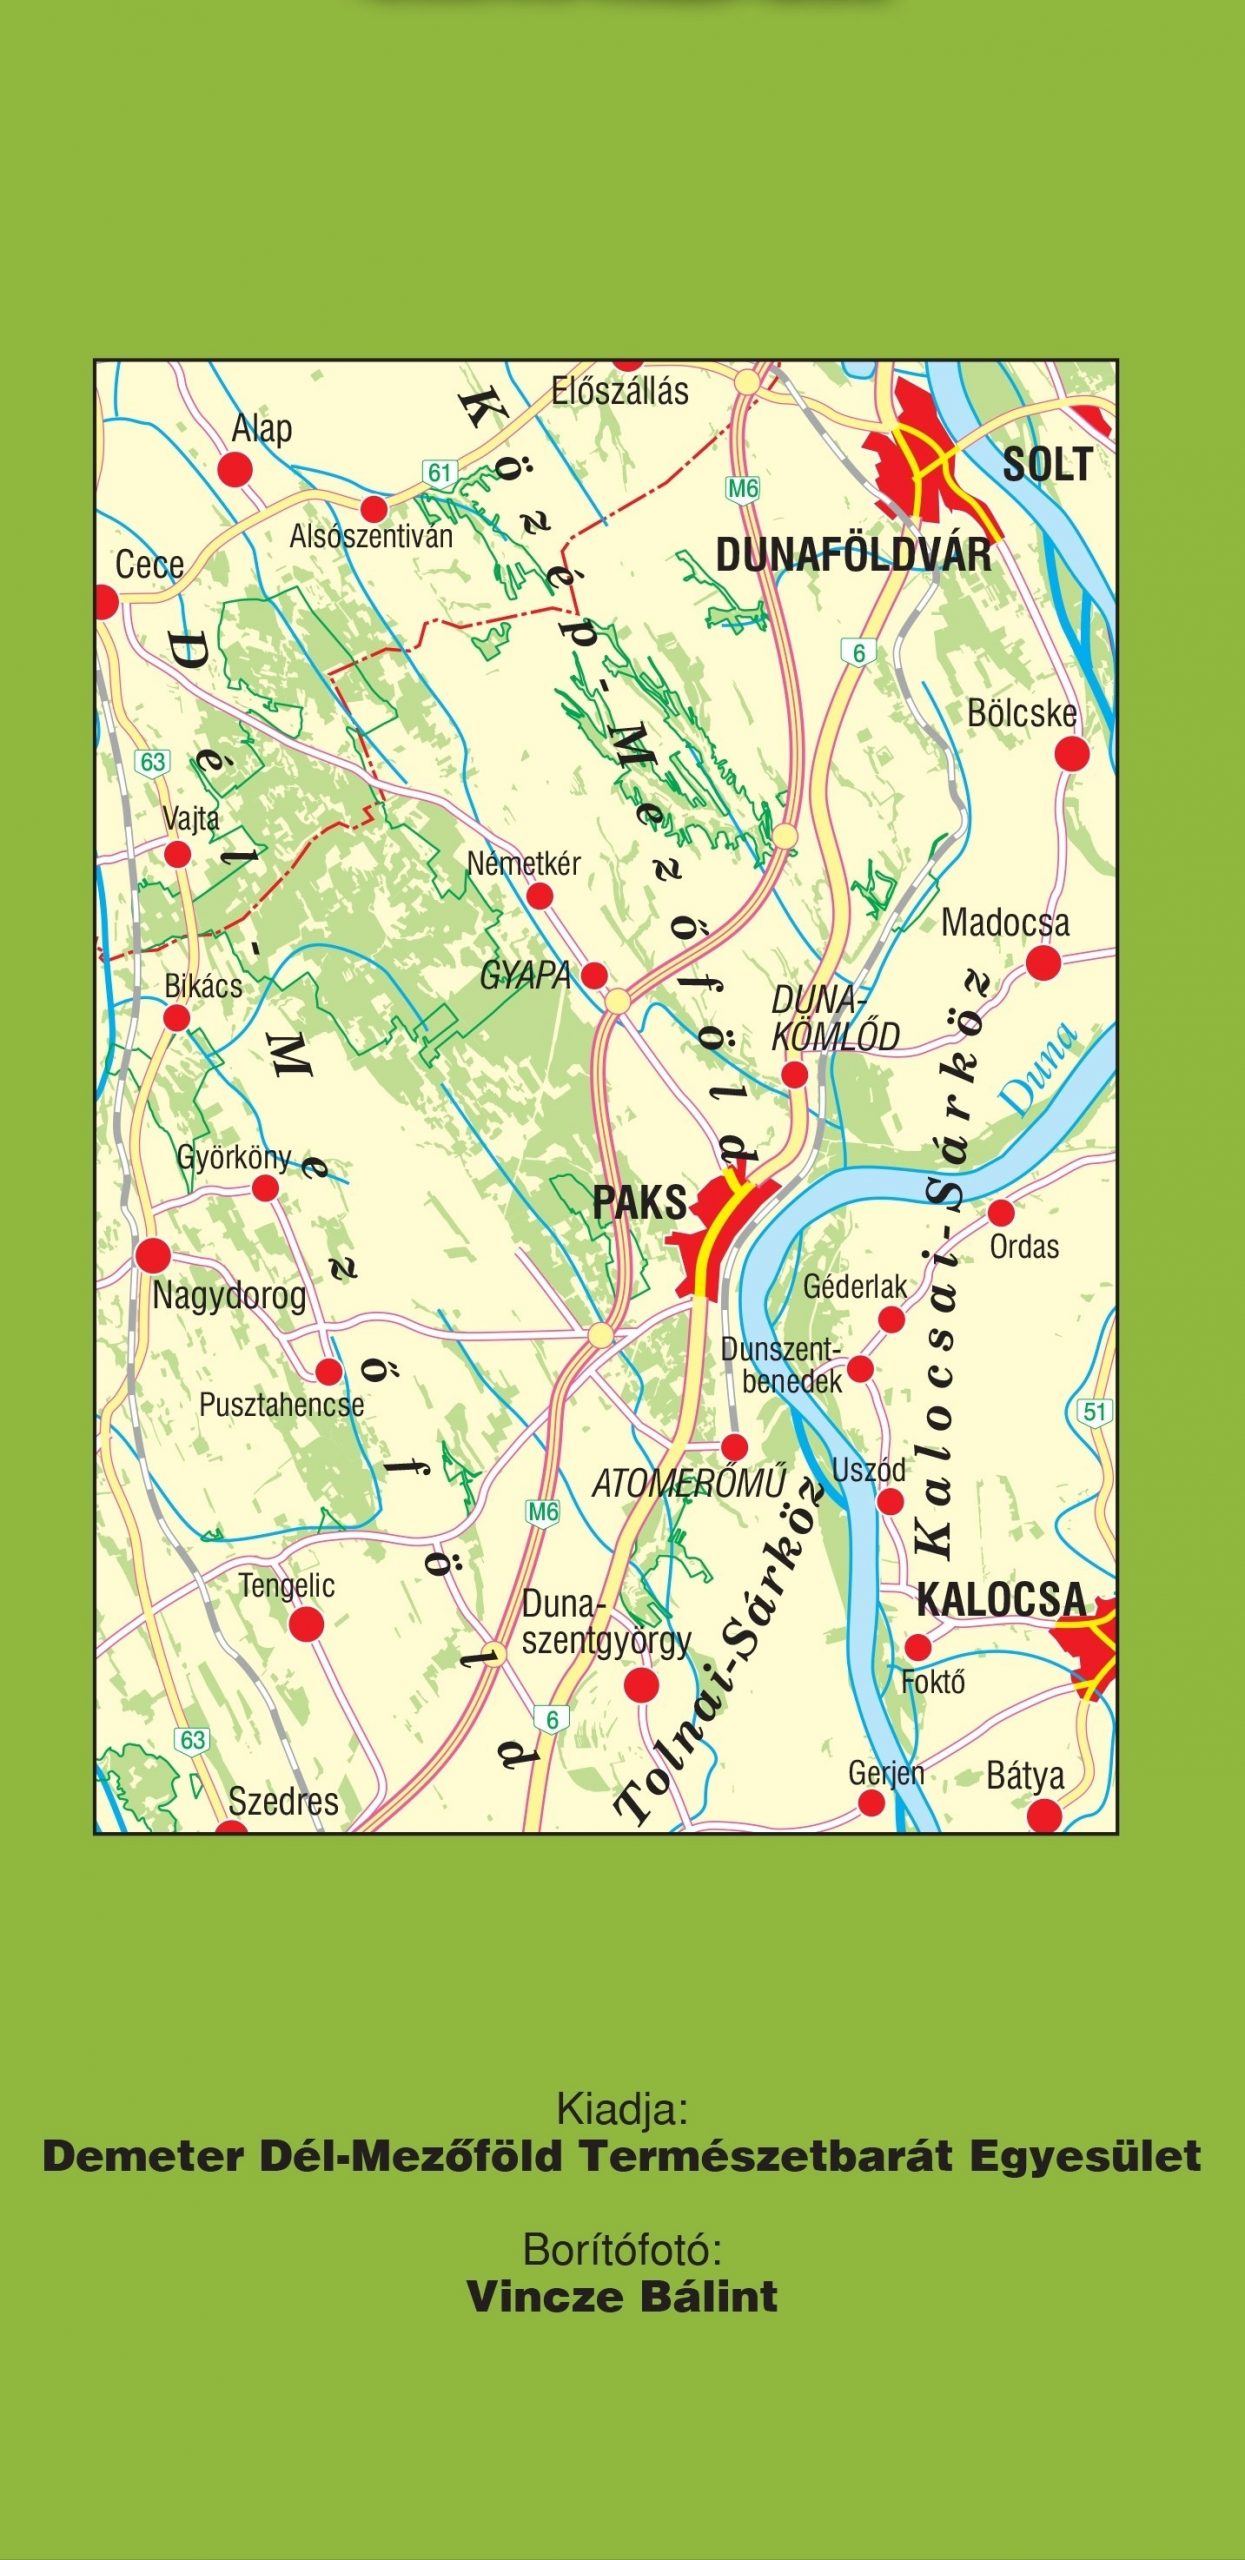  GPS kompatibilis térkép mobil telefonokra / tabletekre: https://www.avenzamaps.com/maps/1161276/del-mezofold-turista-biciklis-terkep-tourist-biking-map